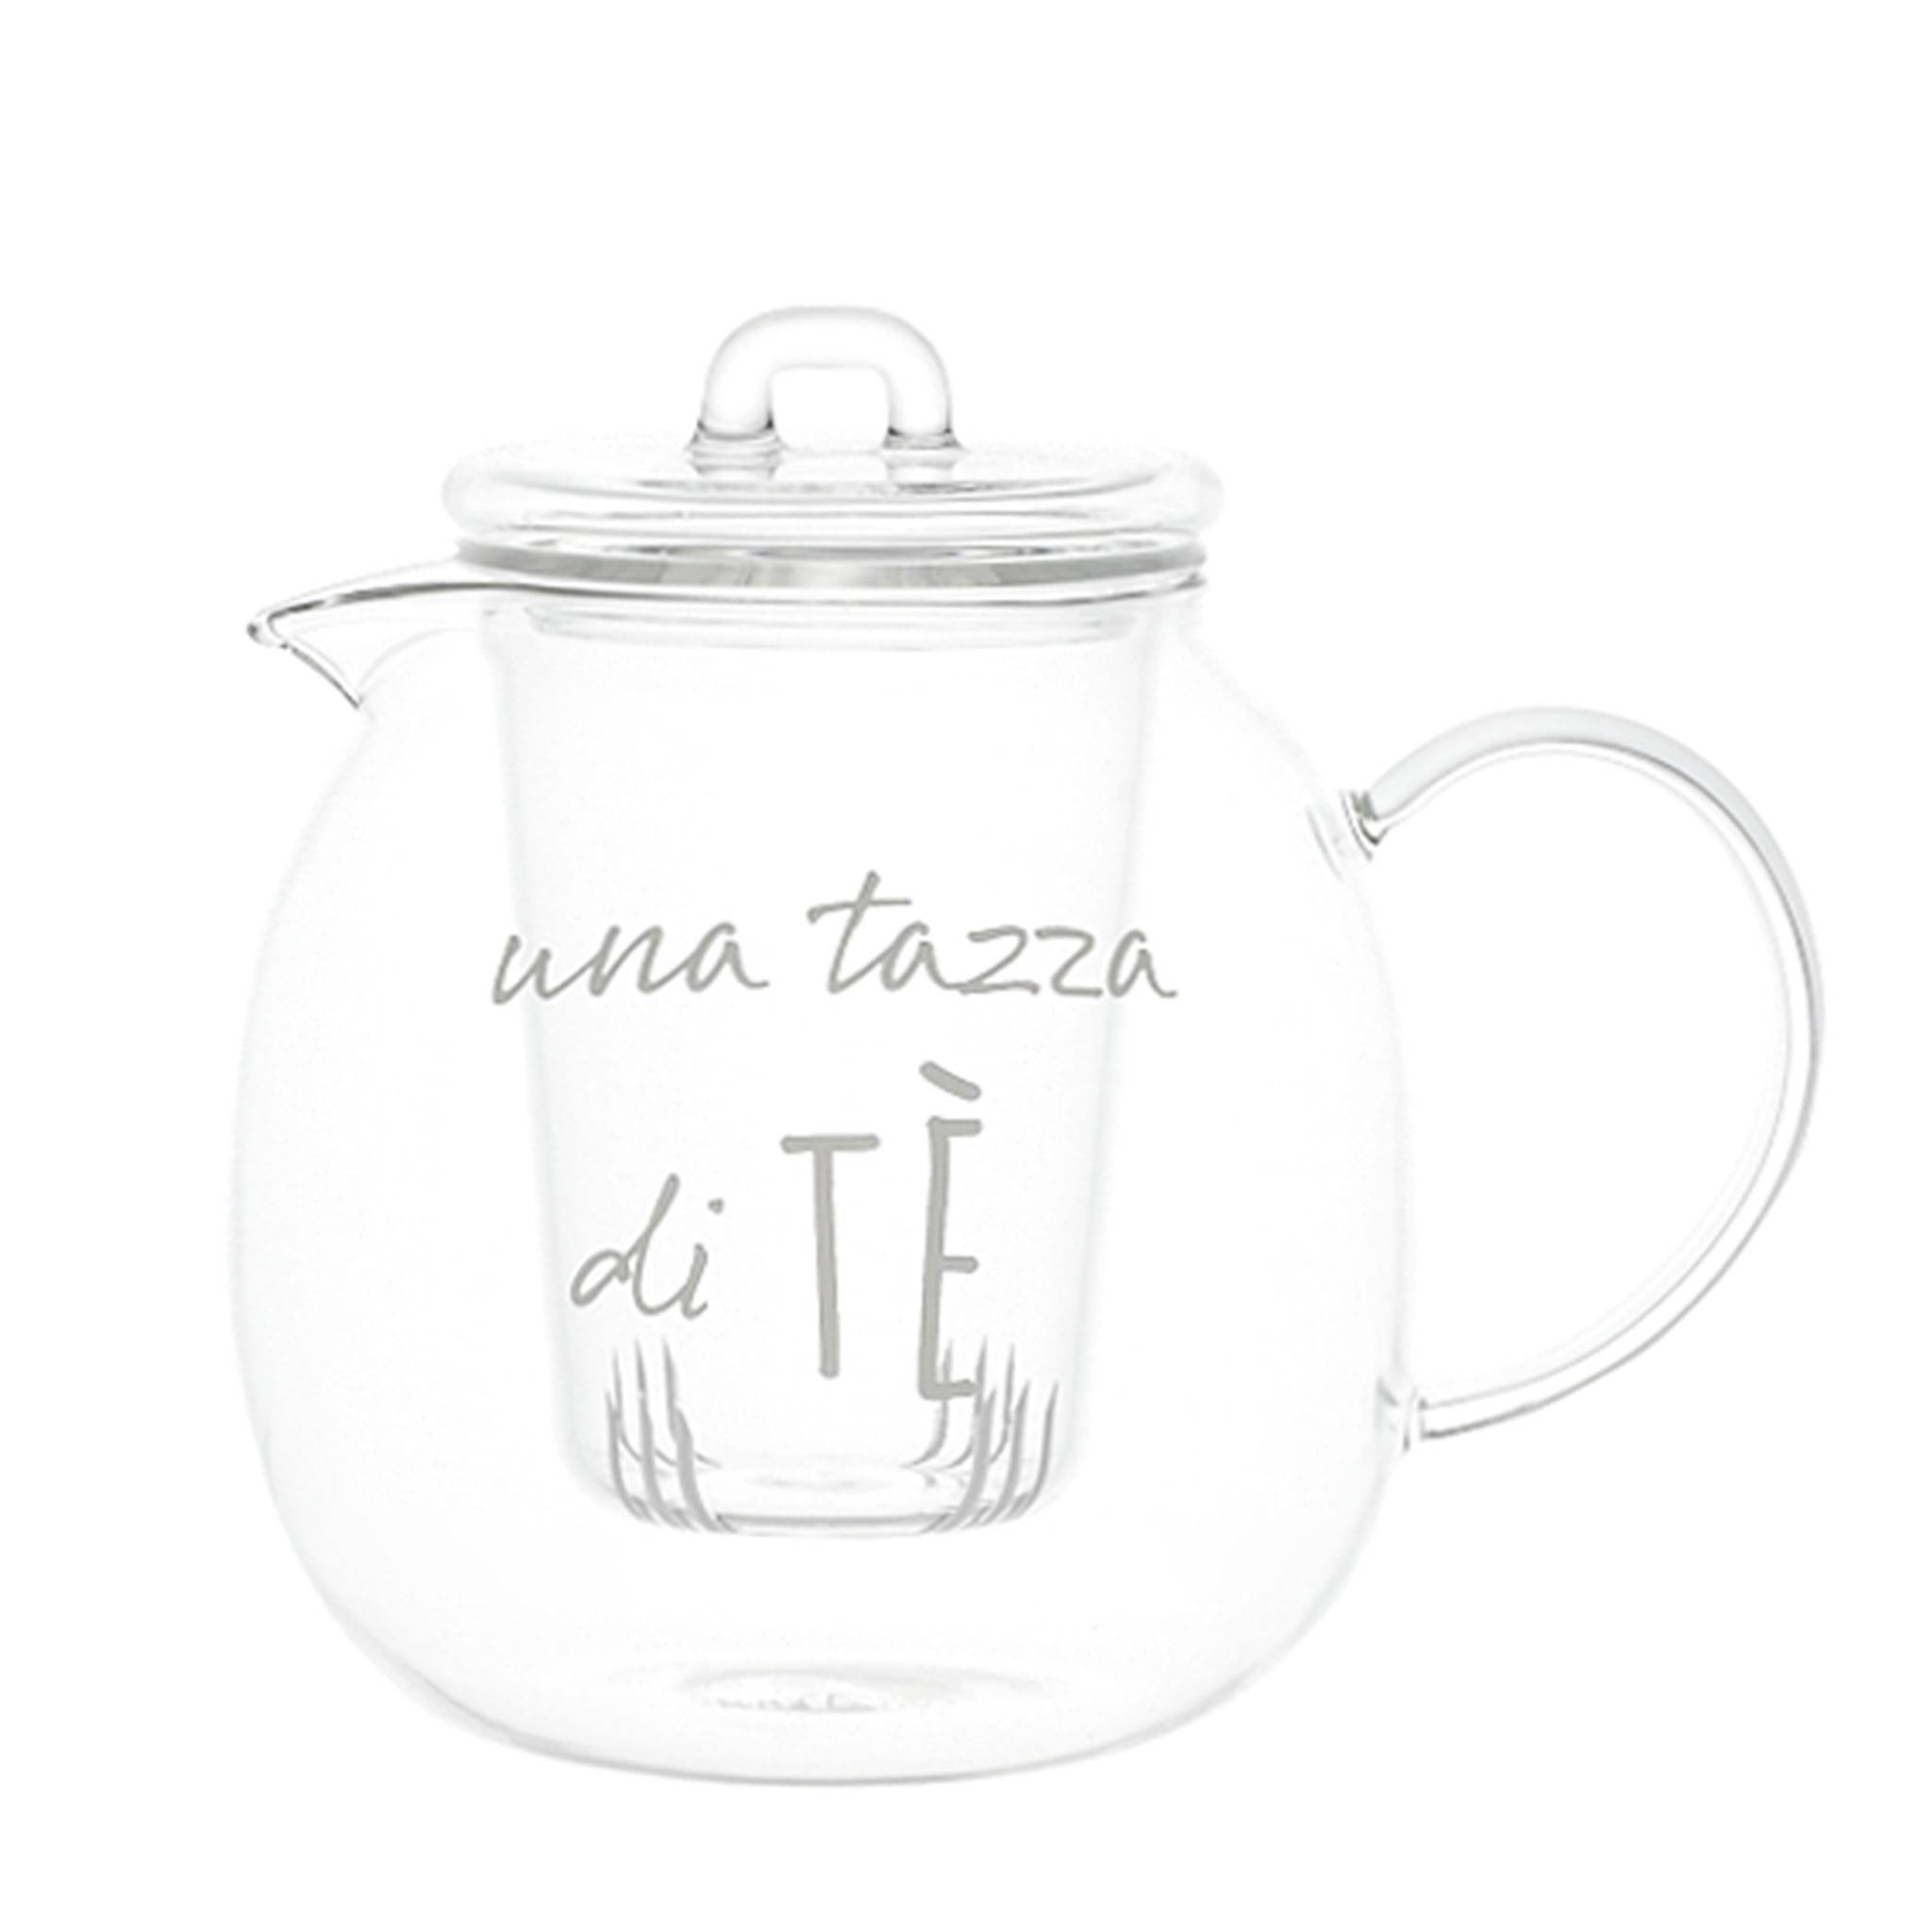 A small teapot a cup of tea